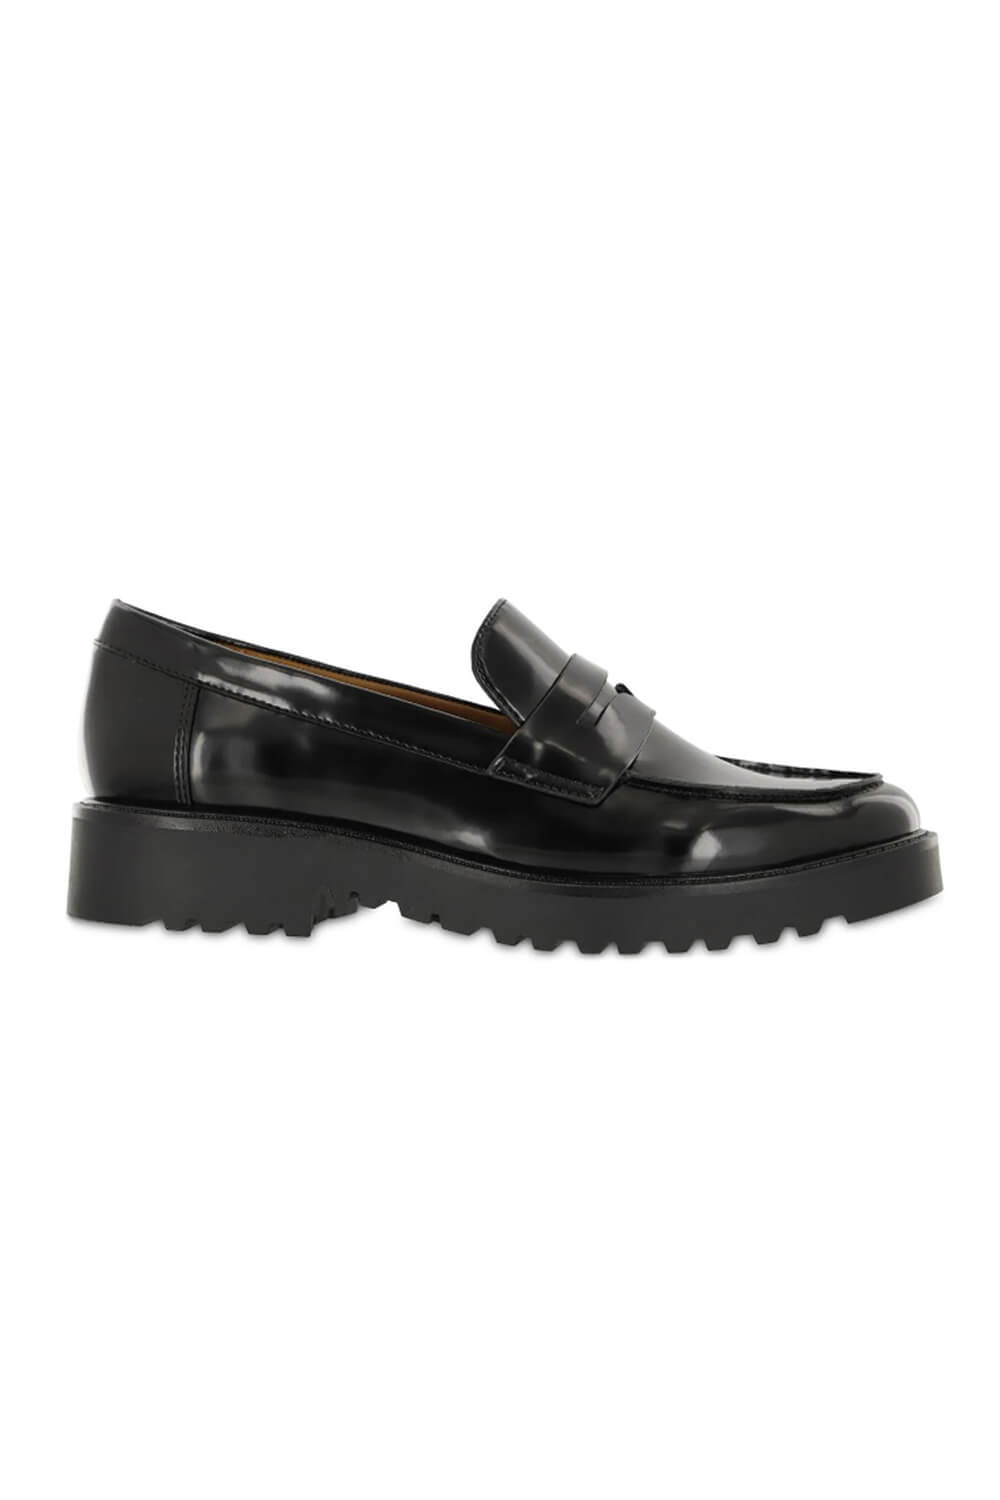 MIA Shoes Hali Loafers for Women in Black | GSA1384501-BLACK – Glik's